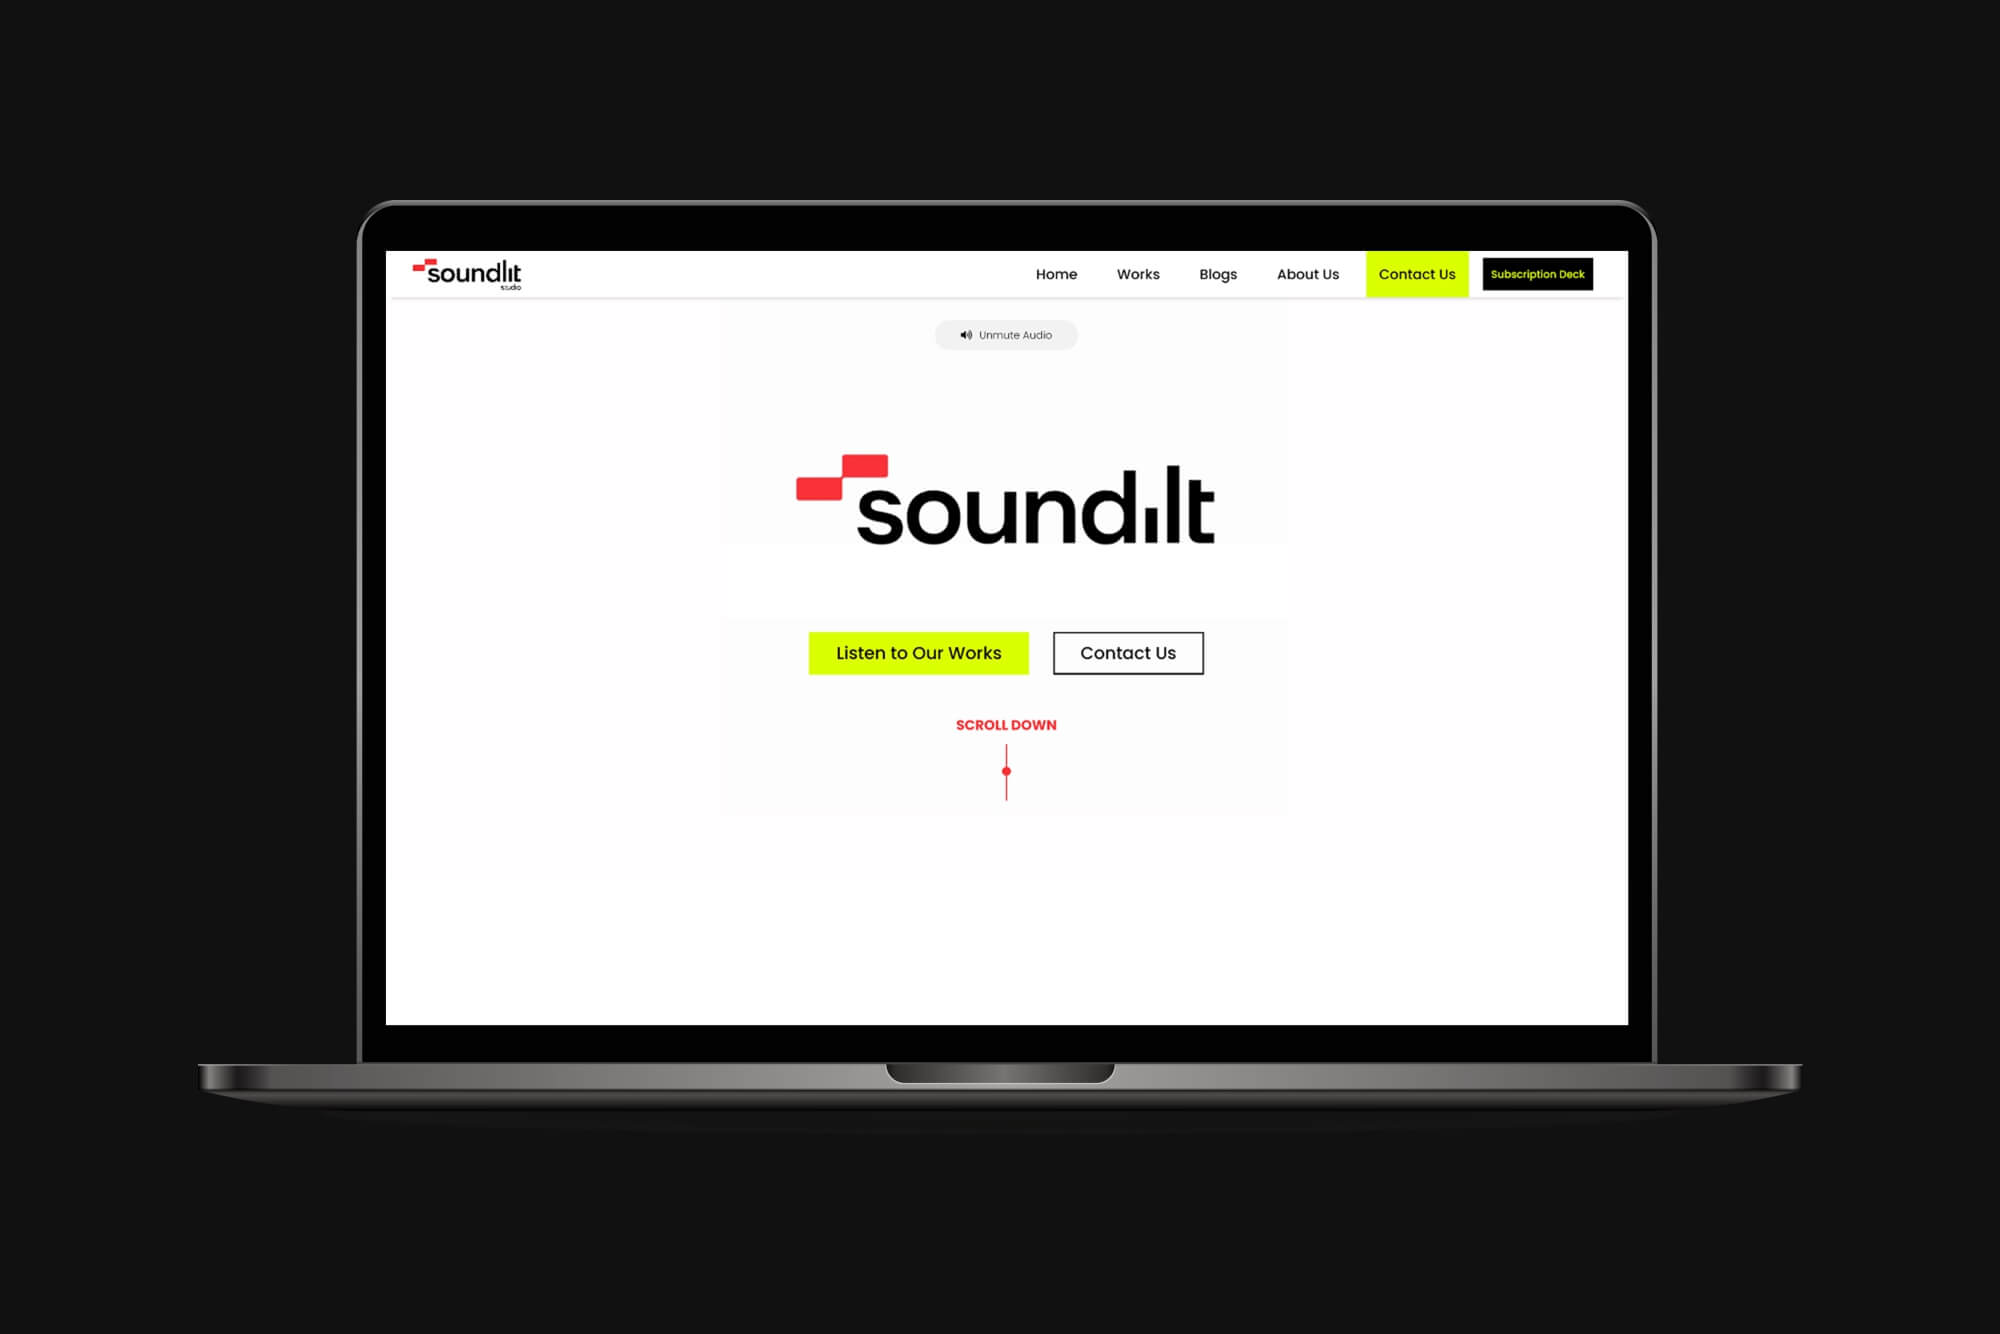 Soundlit Studio